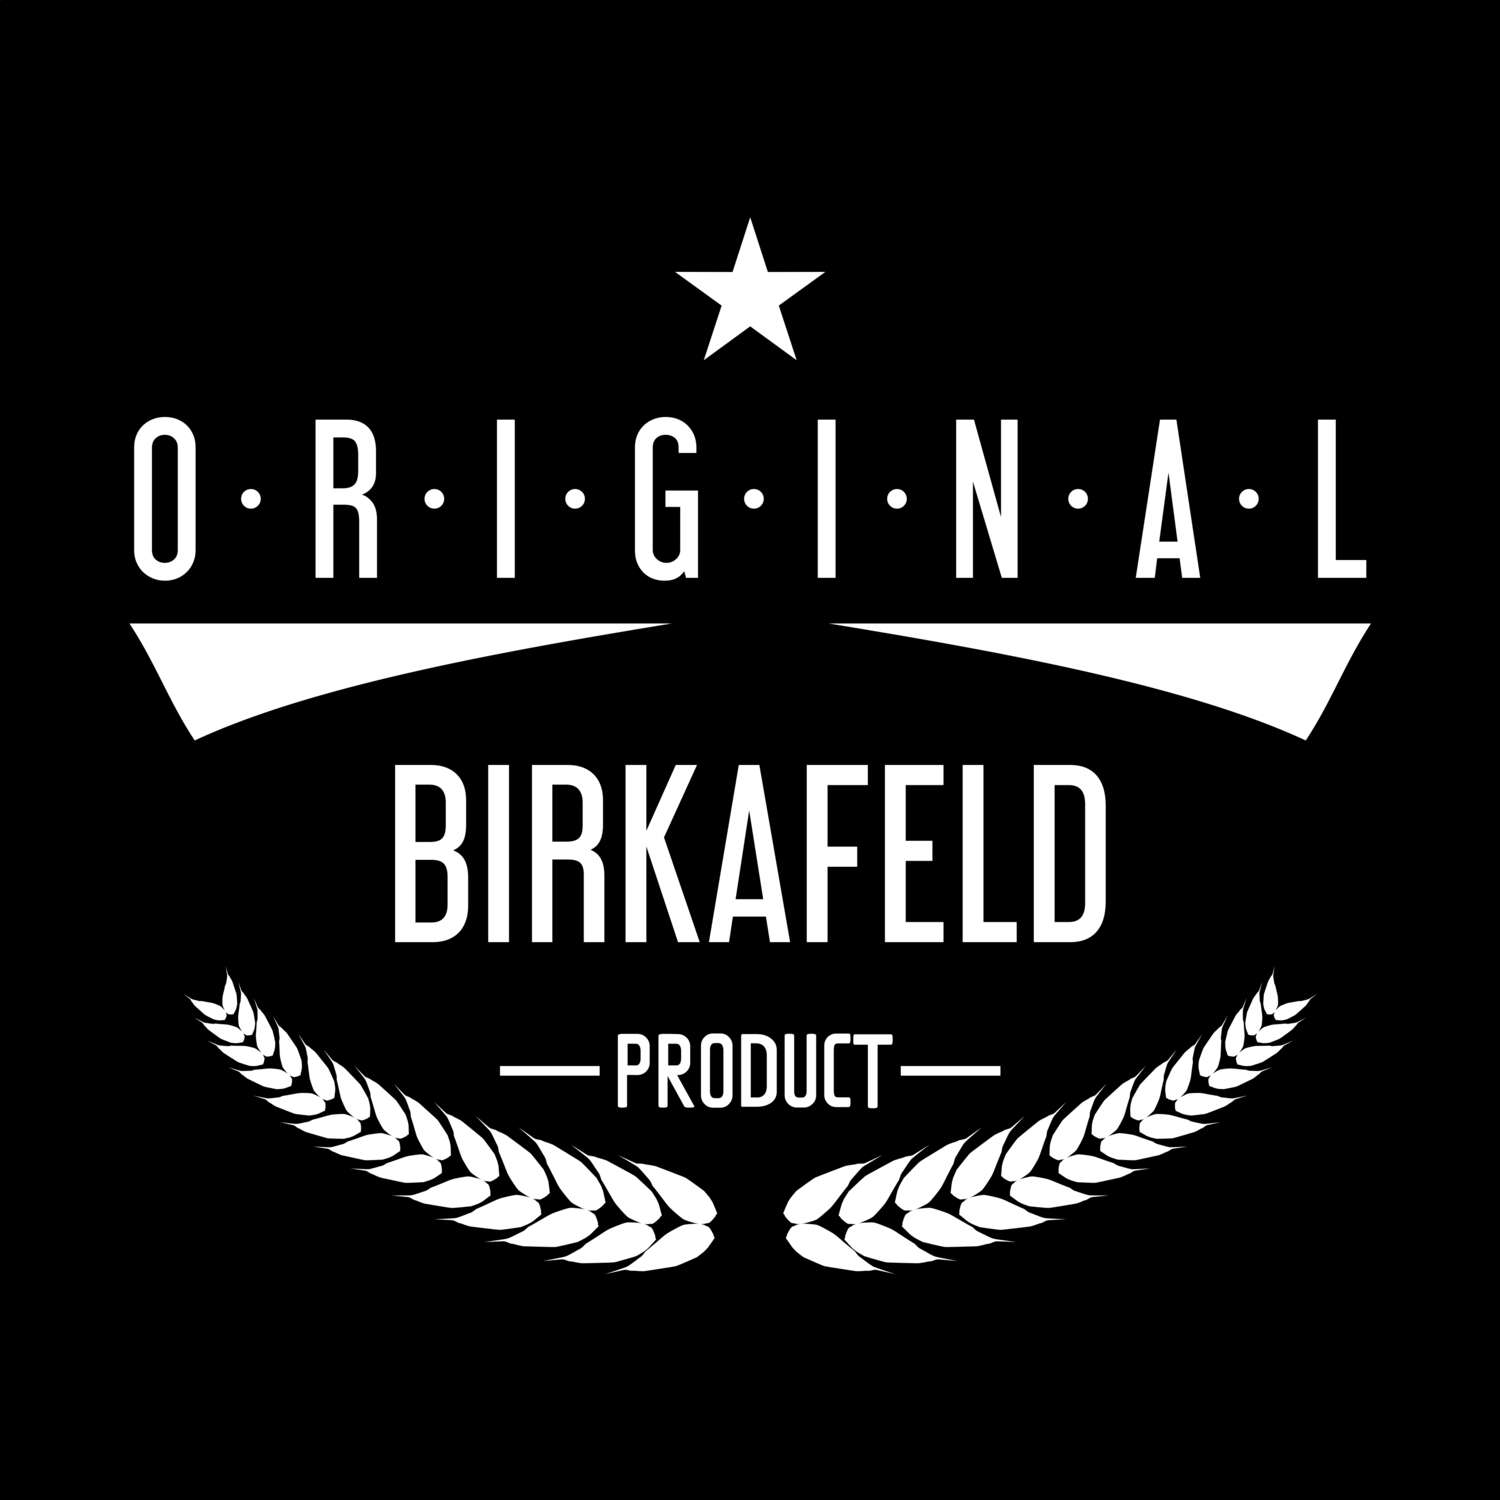 Birkafeld T-Shirt »Original Product«